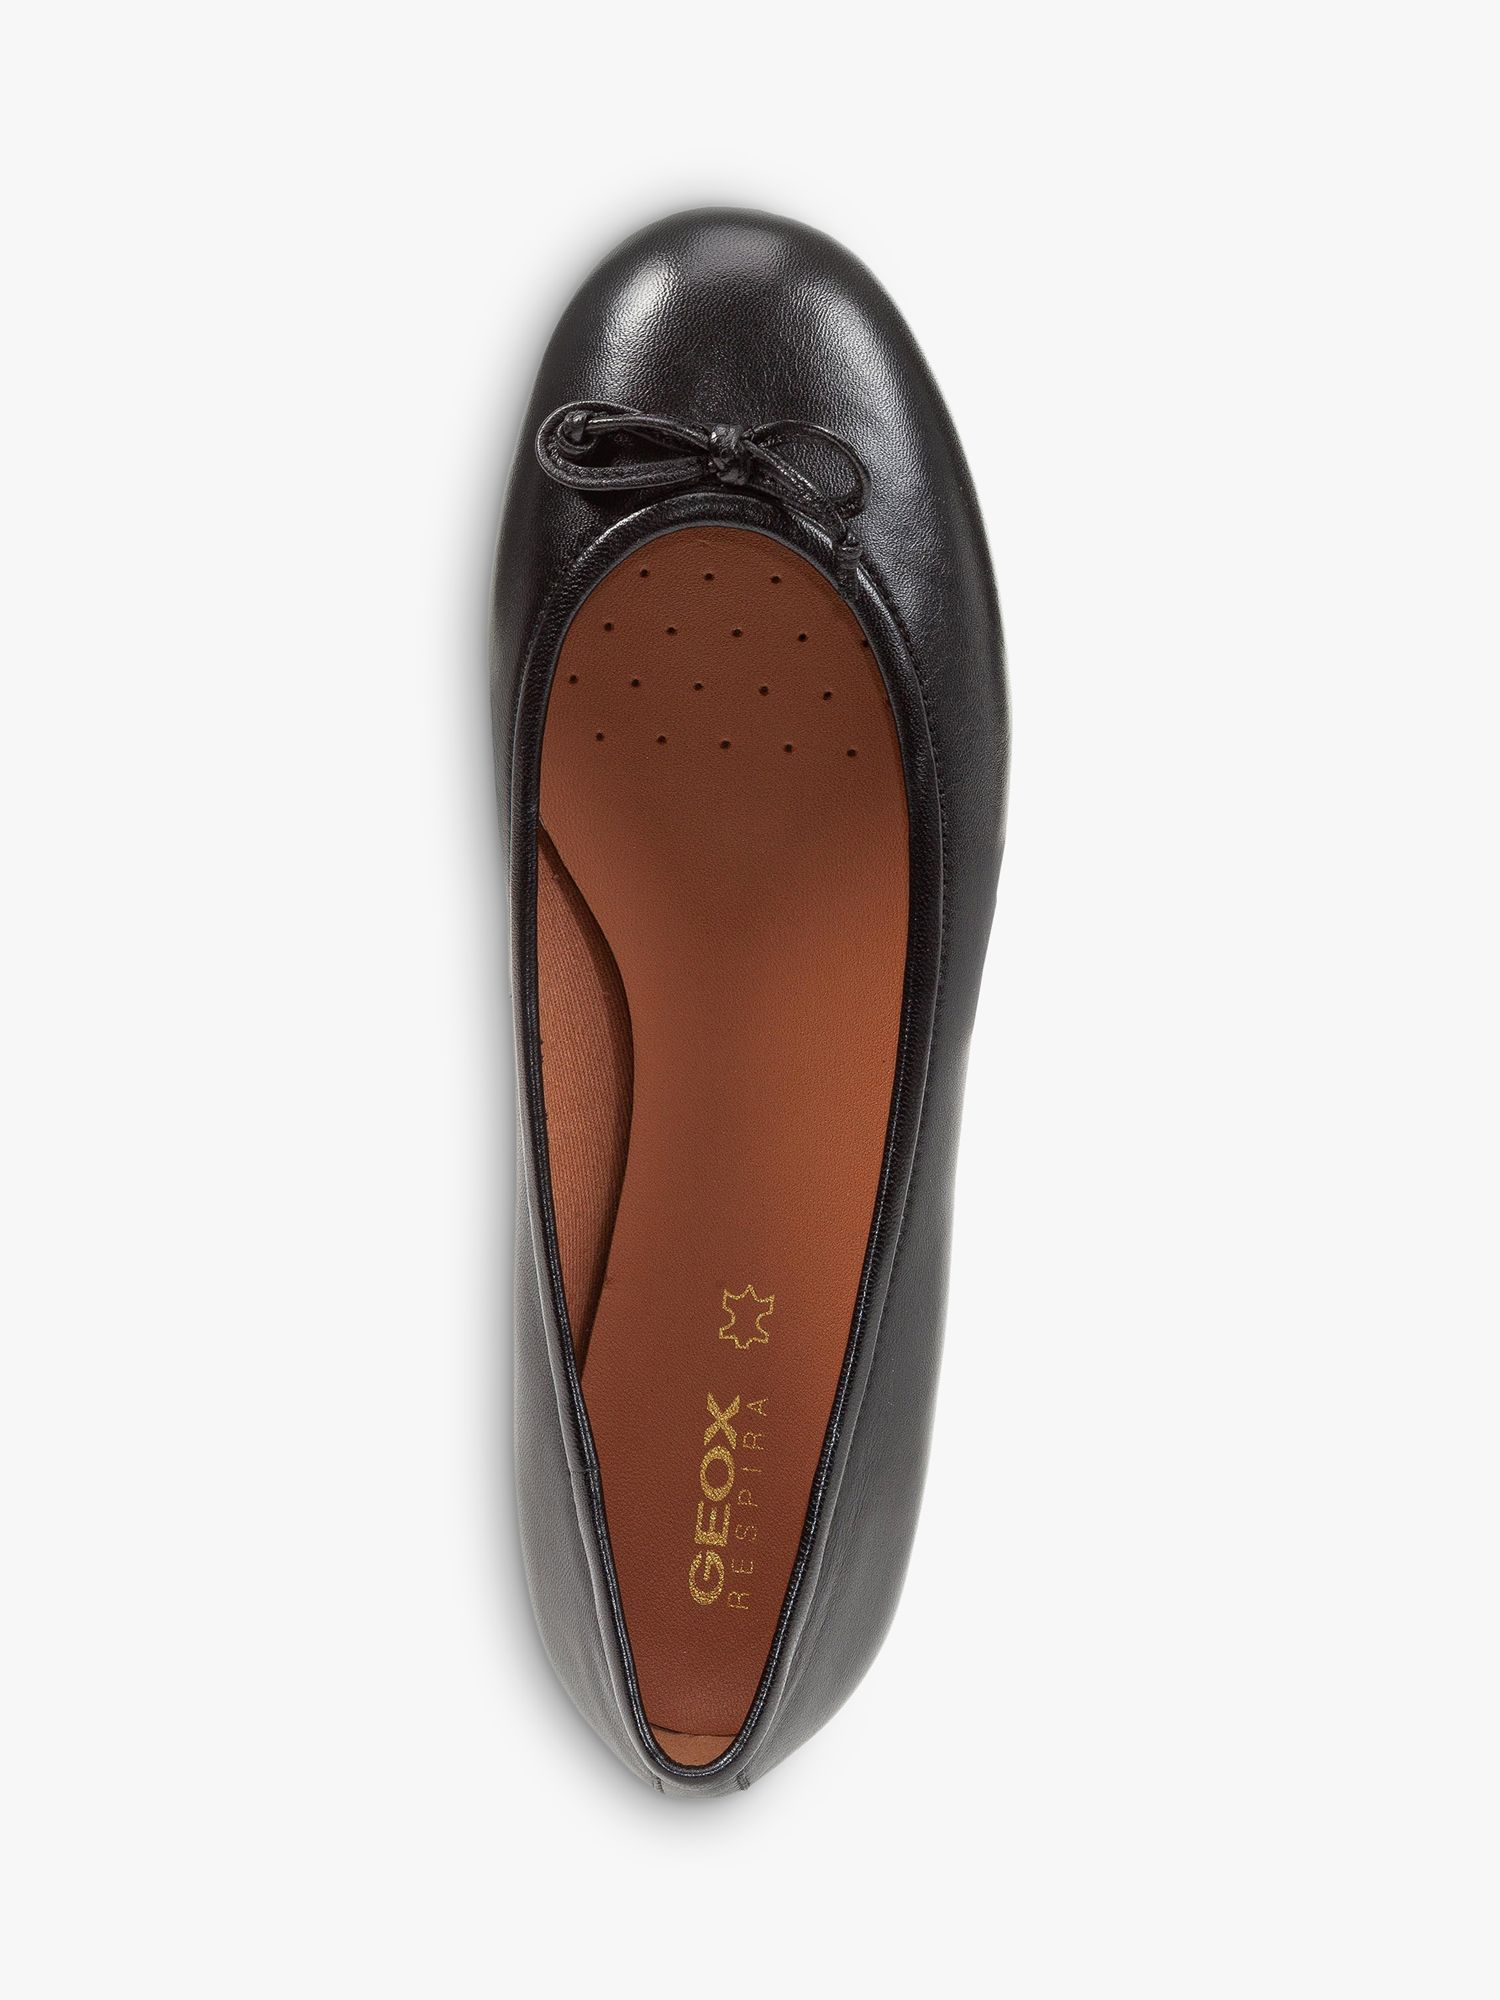 Geox Palmaria Leather Ballerina Shoes, Black, EU36